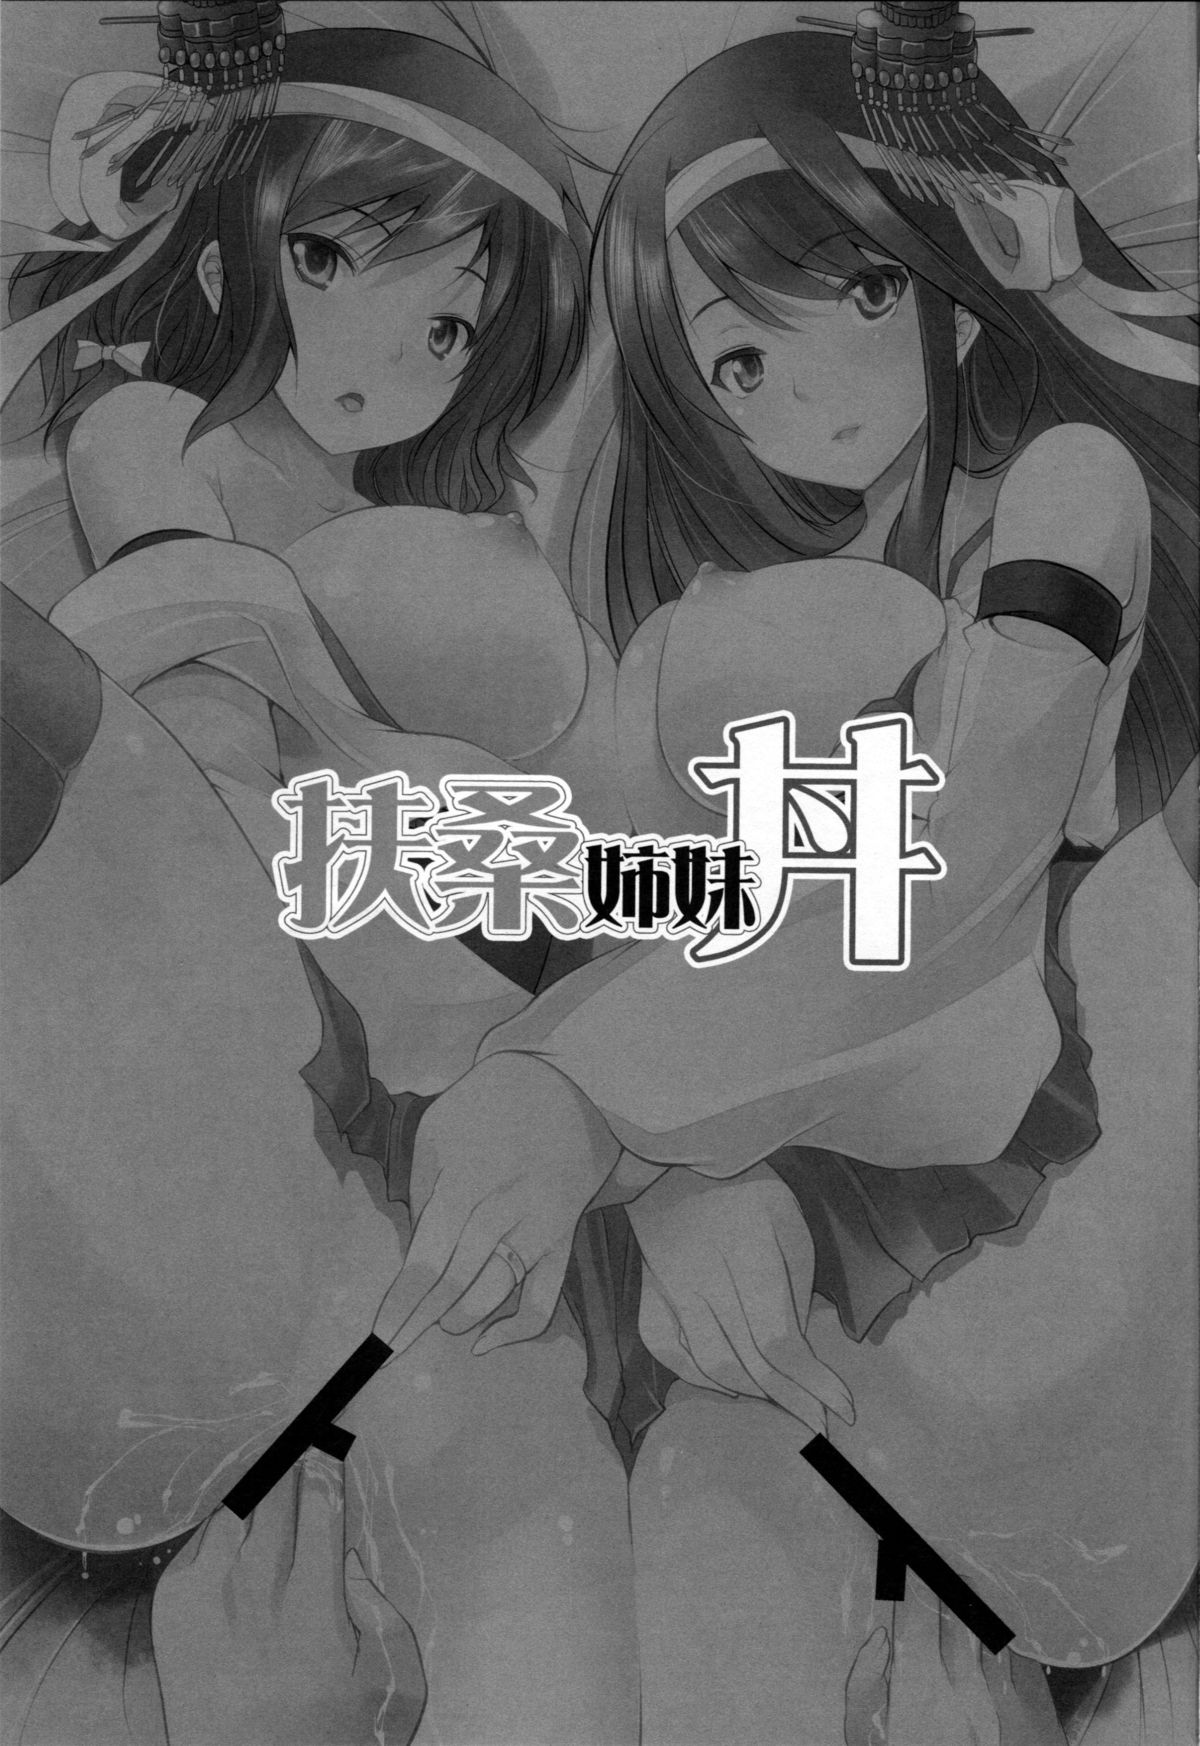 (COMIC1☆9) [セブンスヘブンMAXION (MAKI)] 扶桑姉妹丼 (艦隊これくしょん -艦これ-)